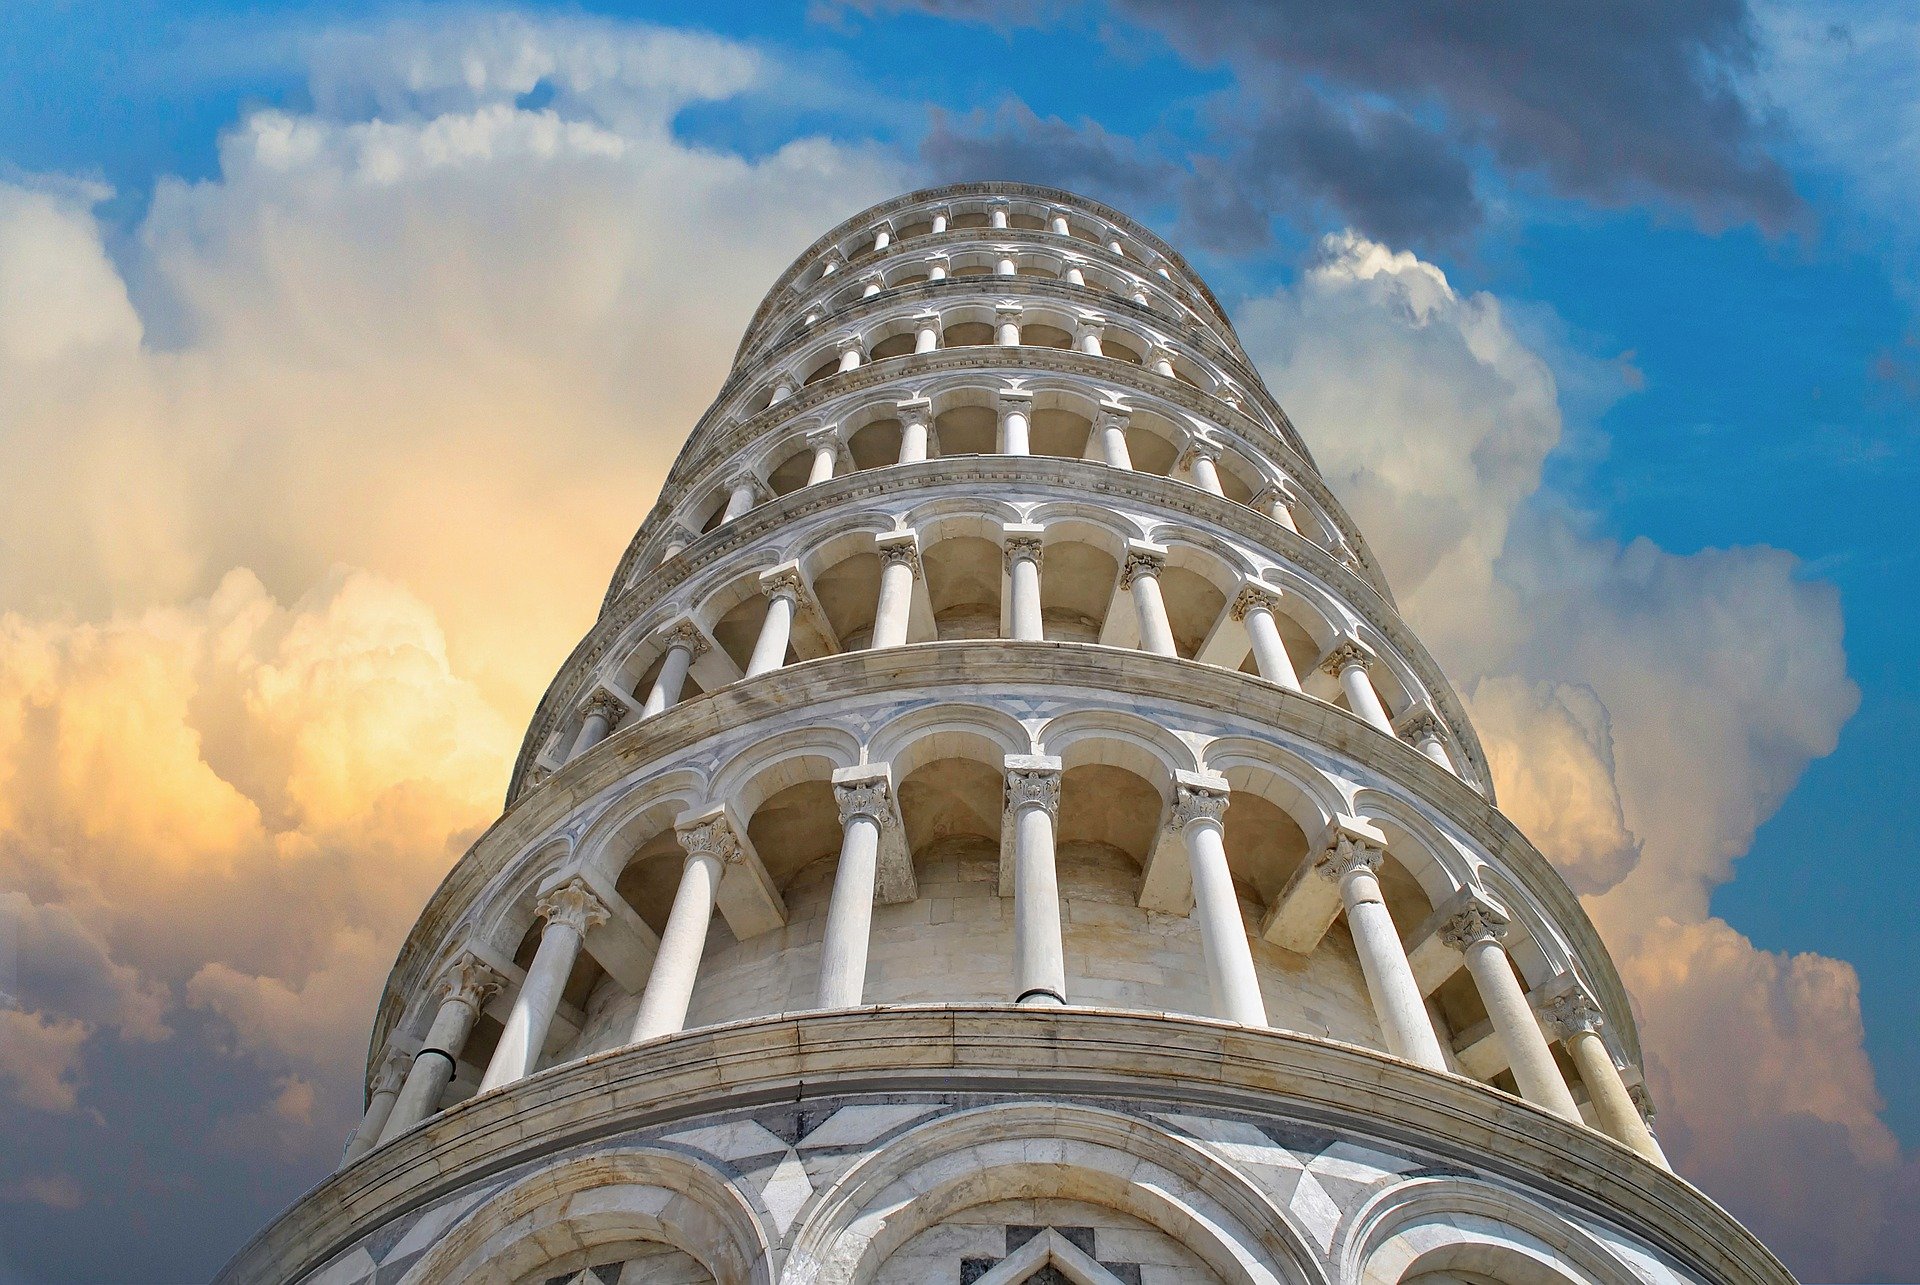 PISA - Foto di Nicola Giordano da Pixabay